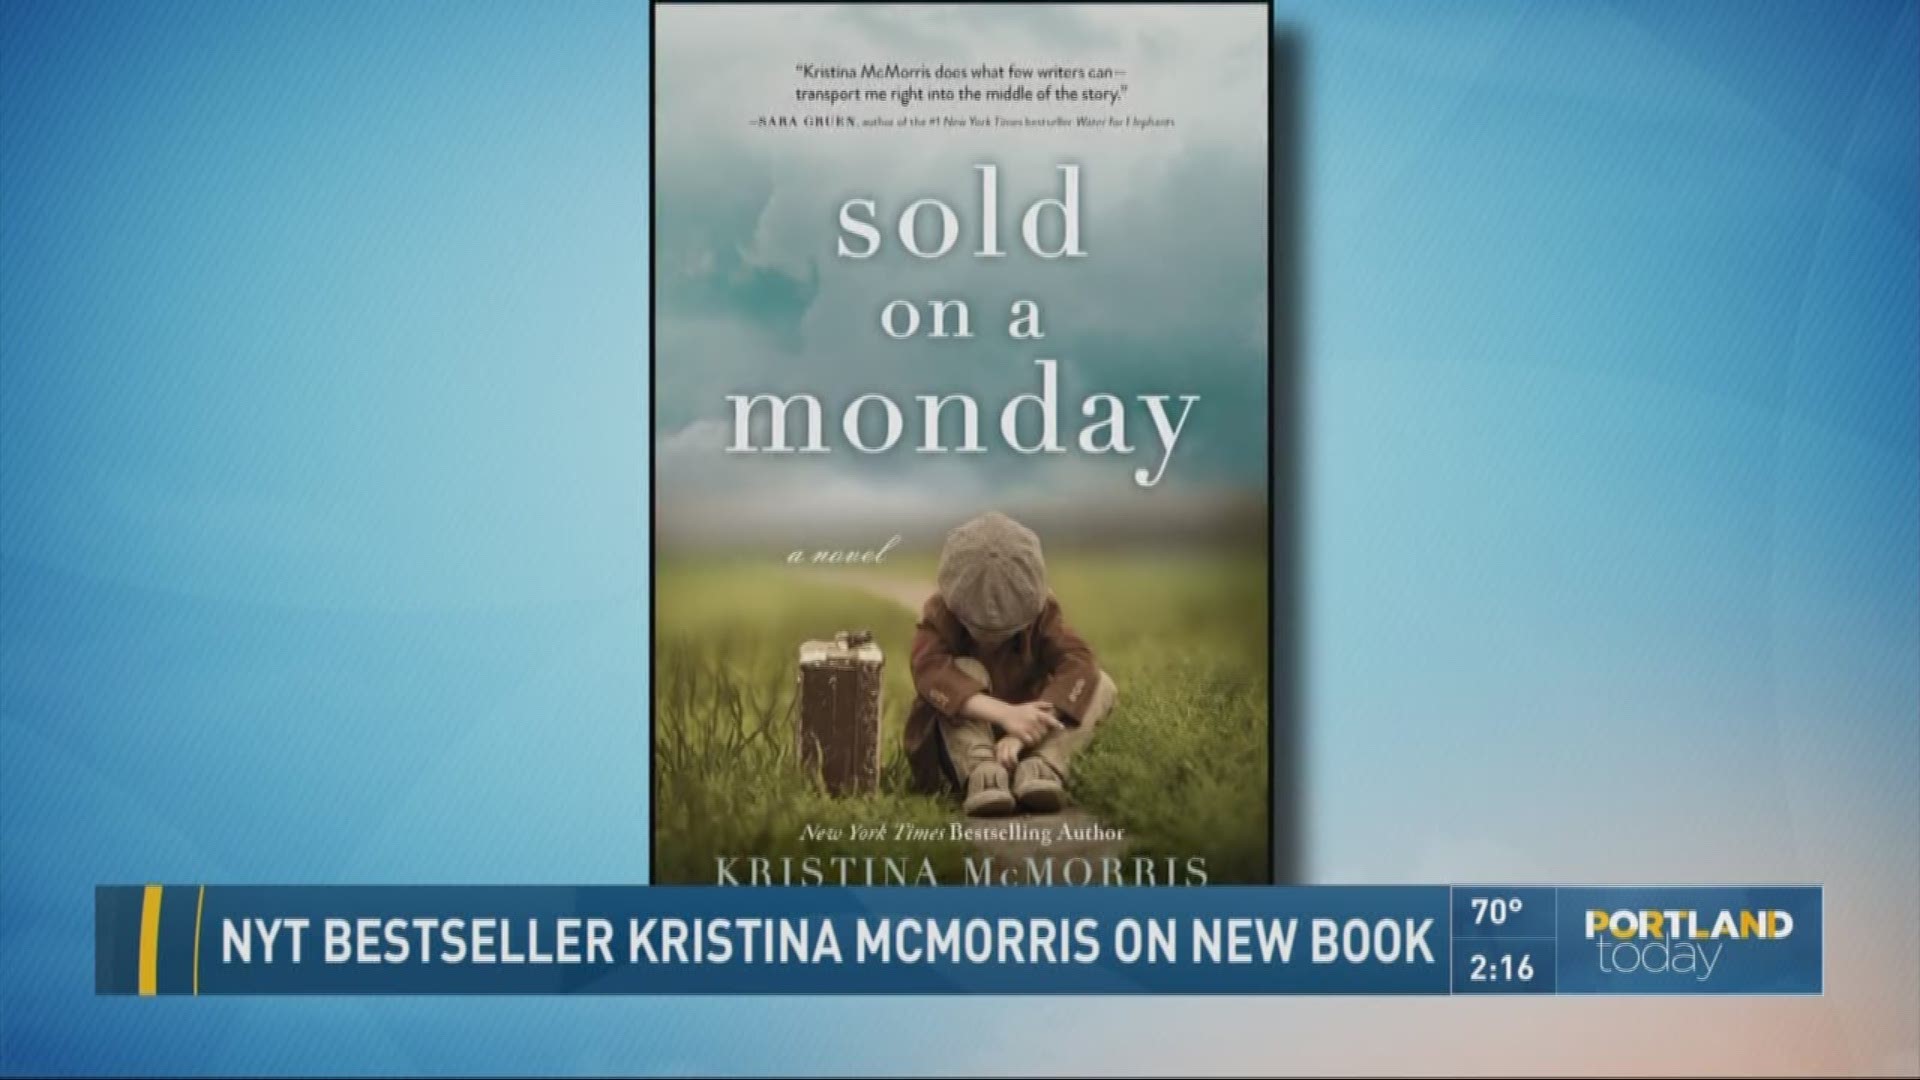 NYT bestseller Kristina McMorris on new book